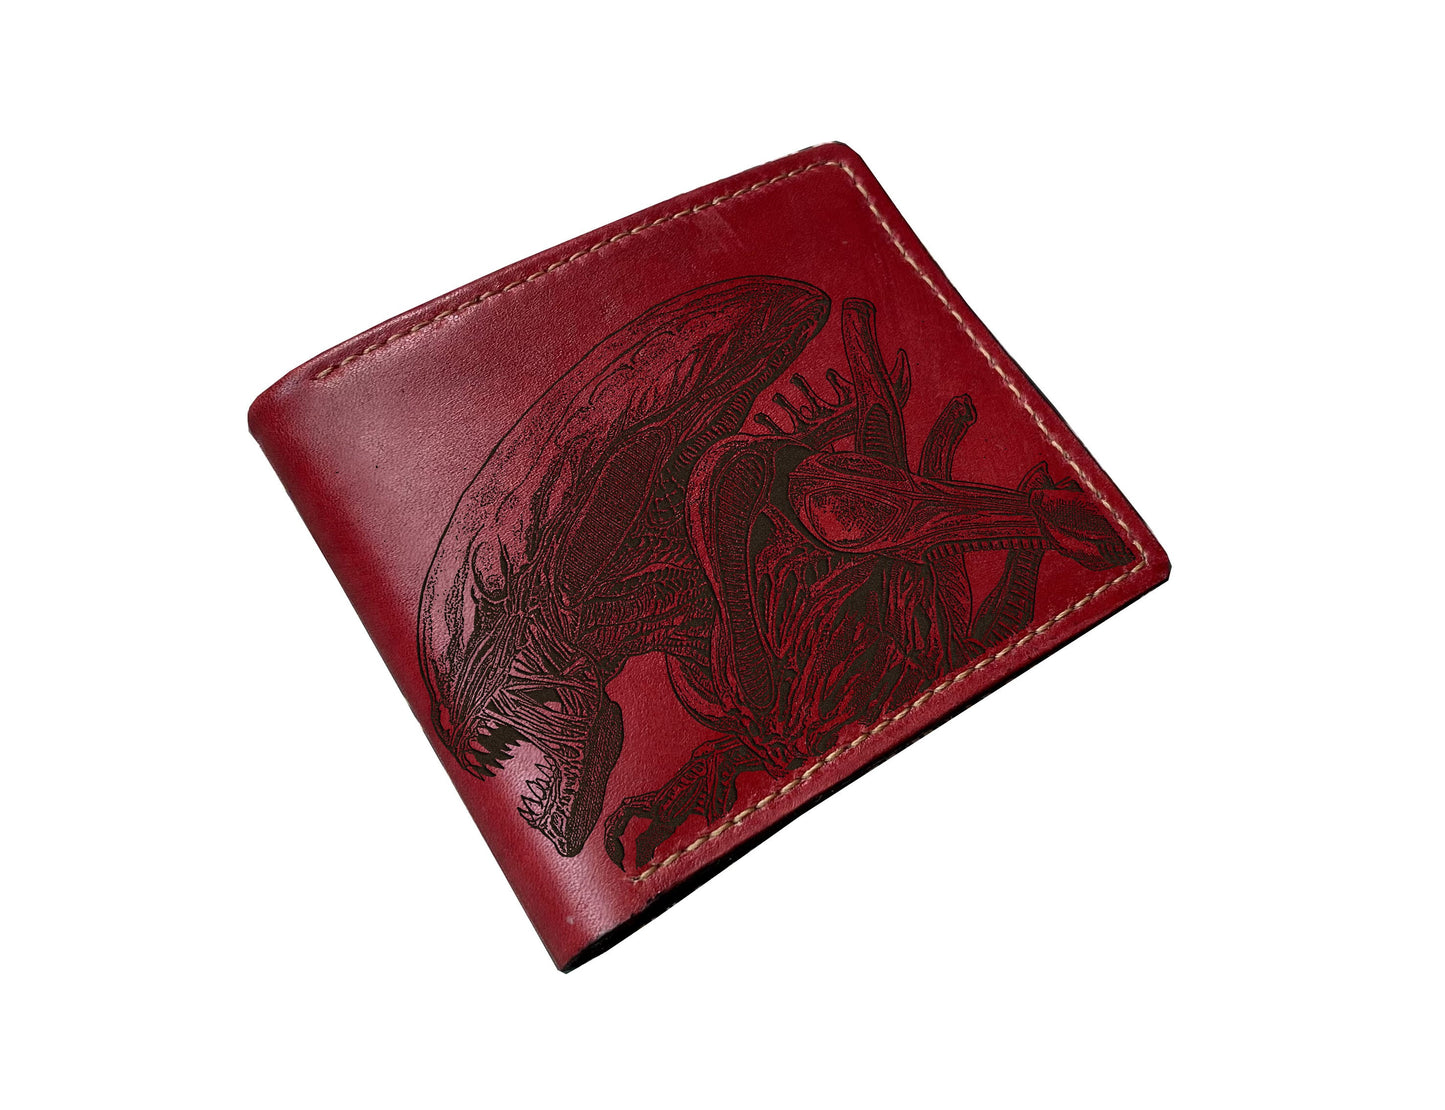 Pesonalized leather gift ideas, Alien Xenomorph art wallet, custom engrave gift ideas for men